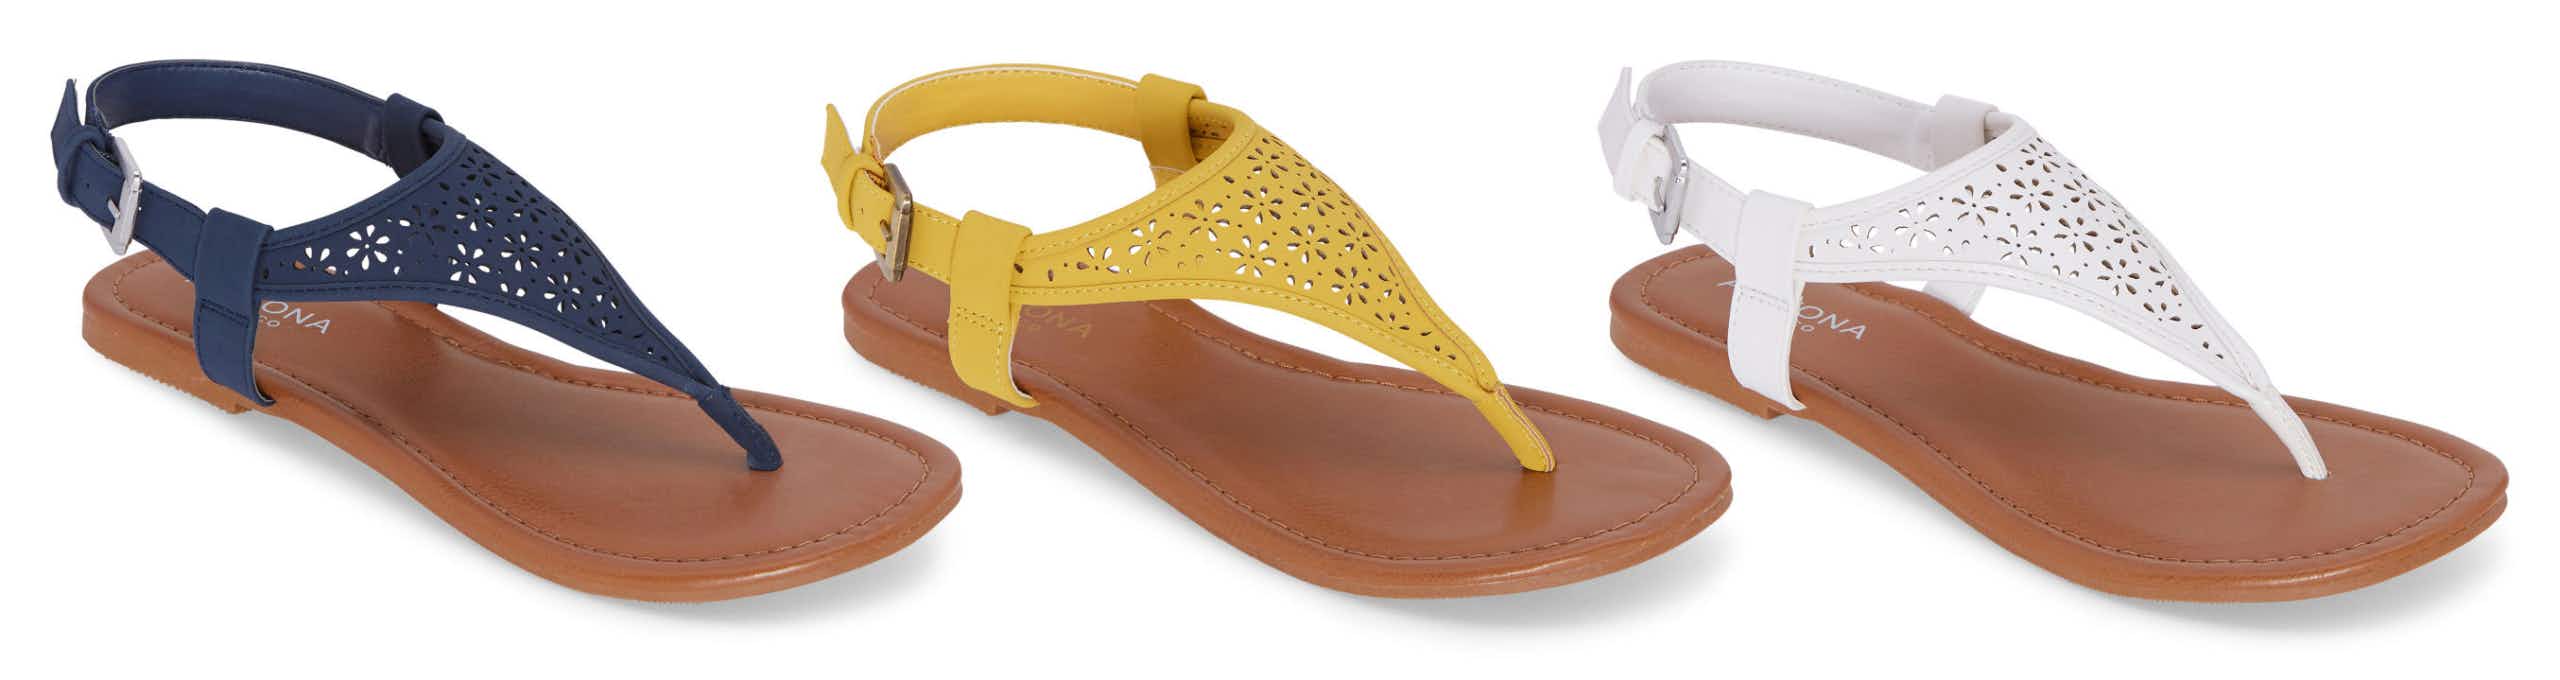 jcpenney-arizona-womens-t-strap-sandal-2021